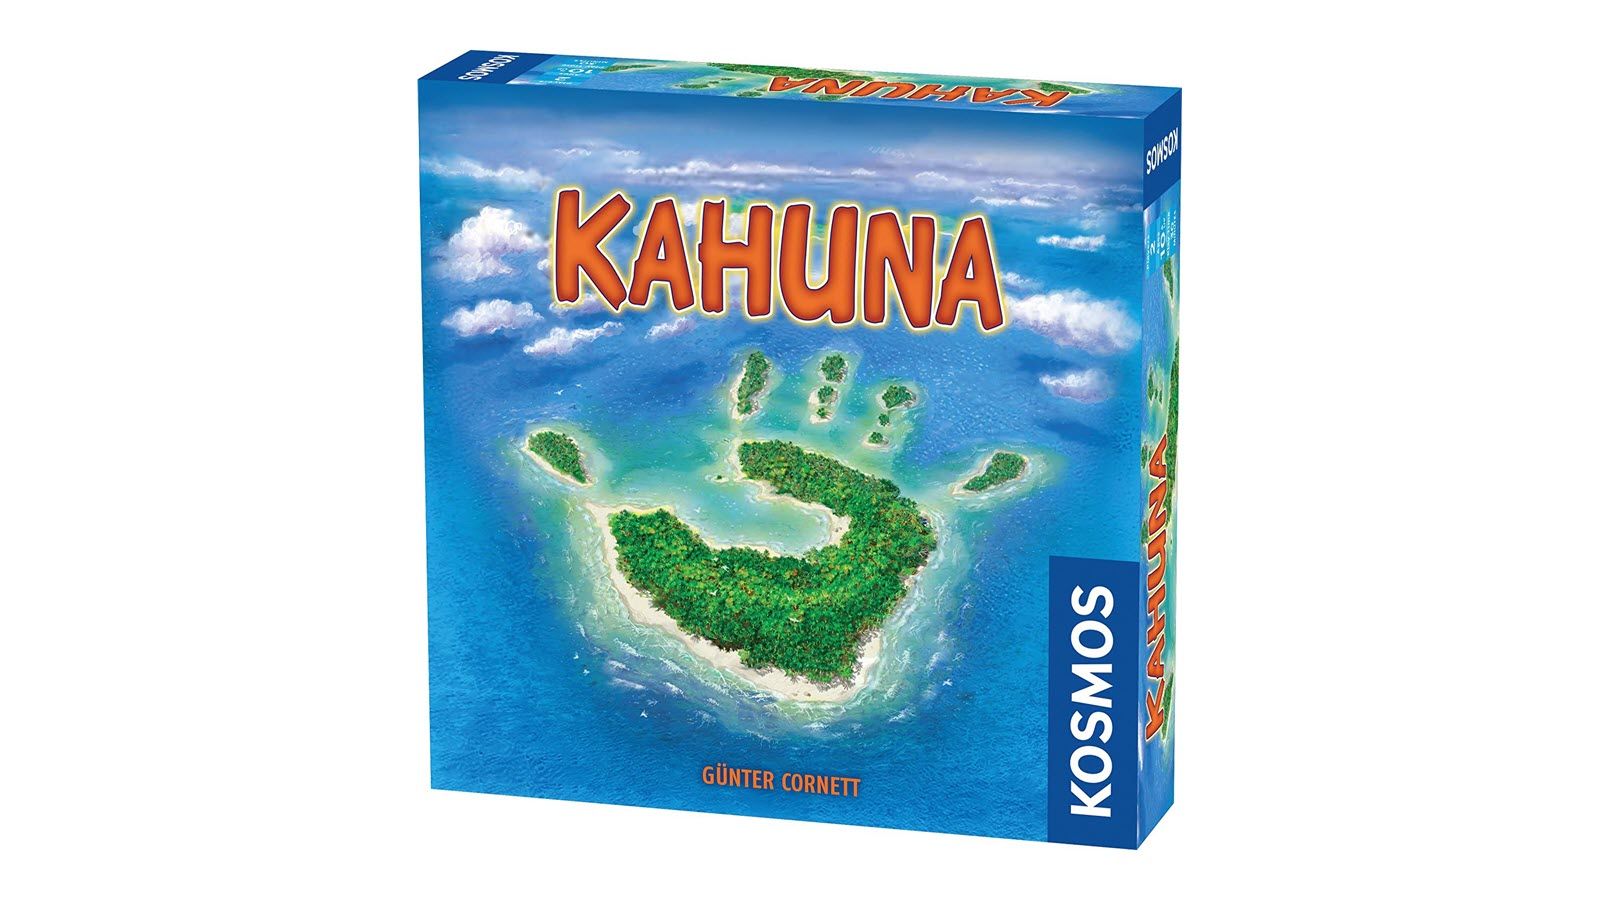 The Kahuna board game box, featuring a hand-shaped island.